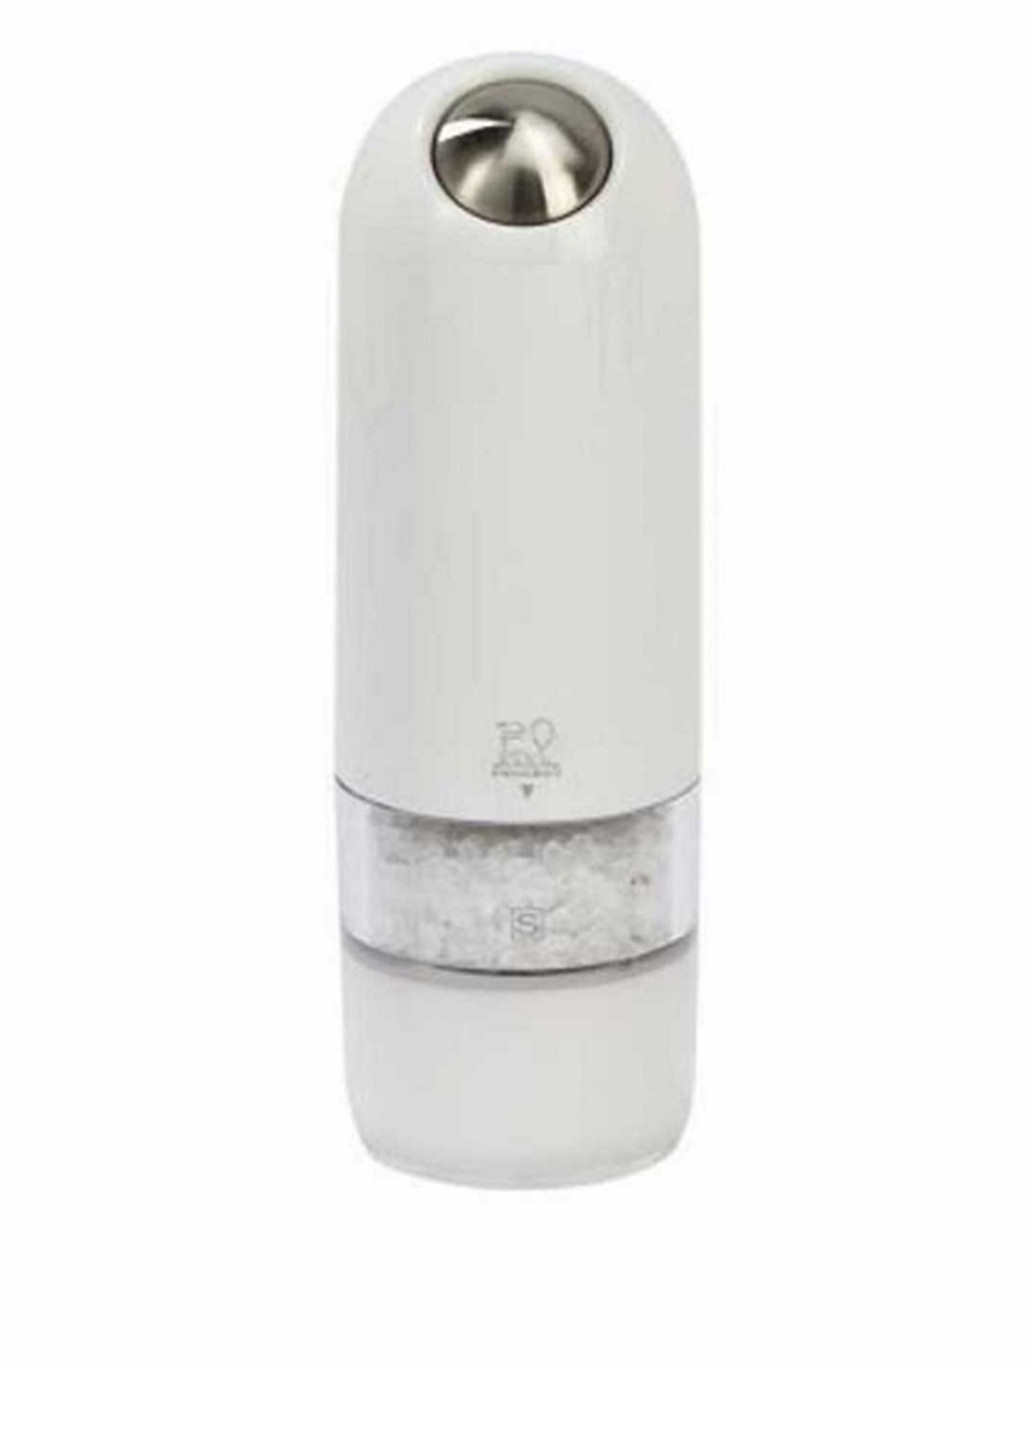 Млин електрична для солі, 17 см Peugeot (221339528)